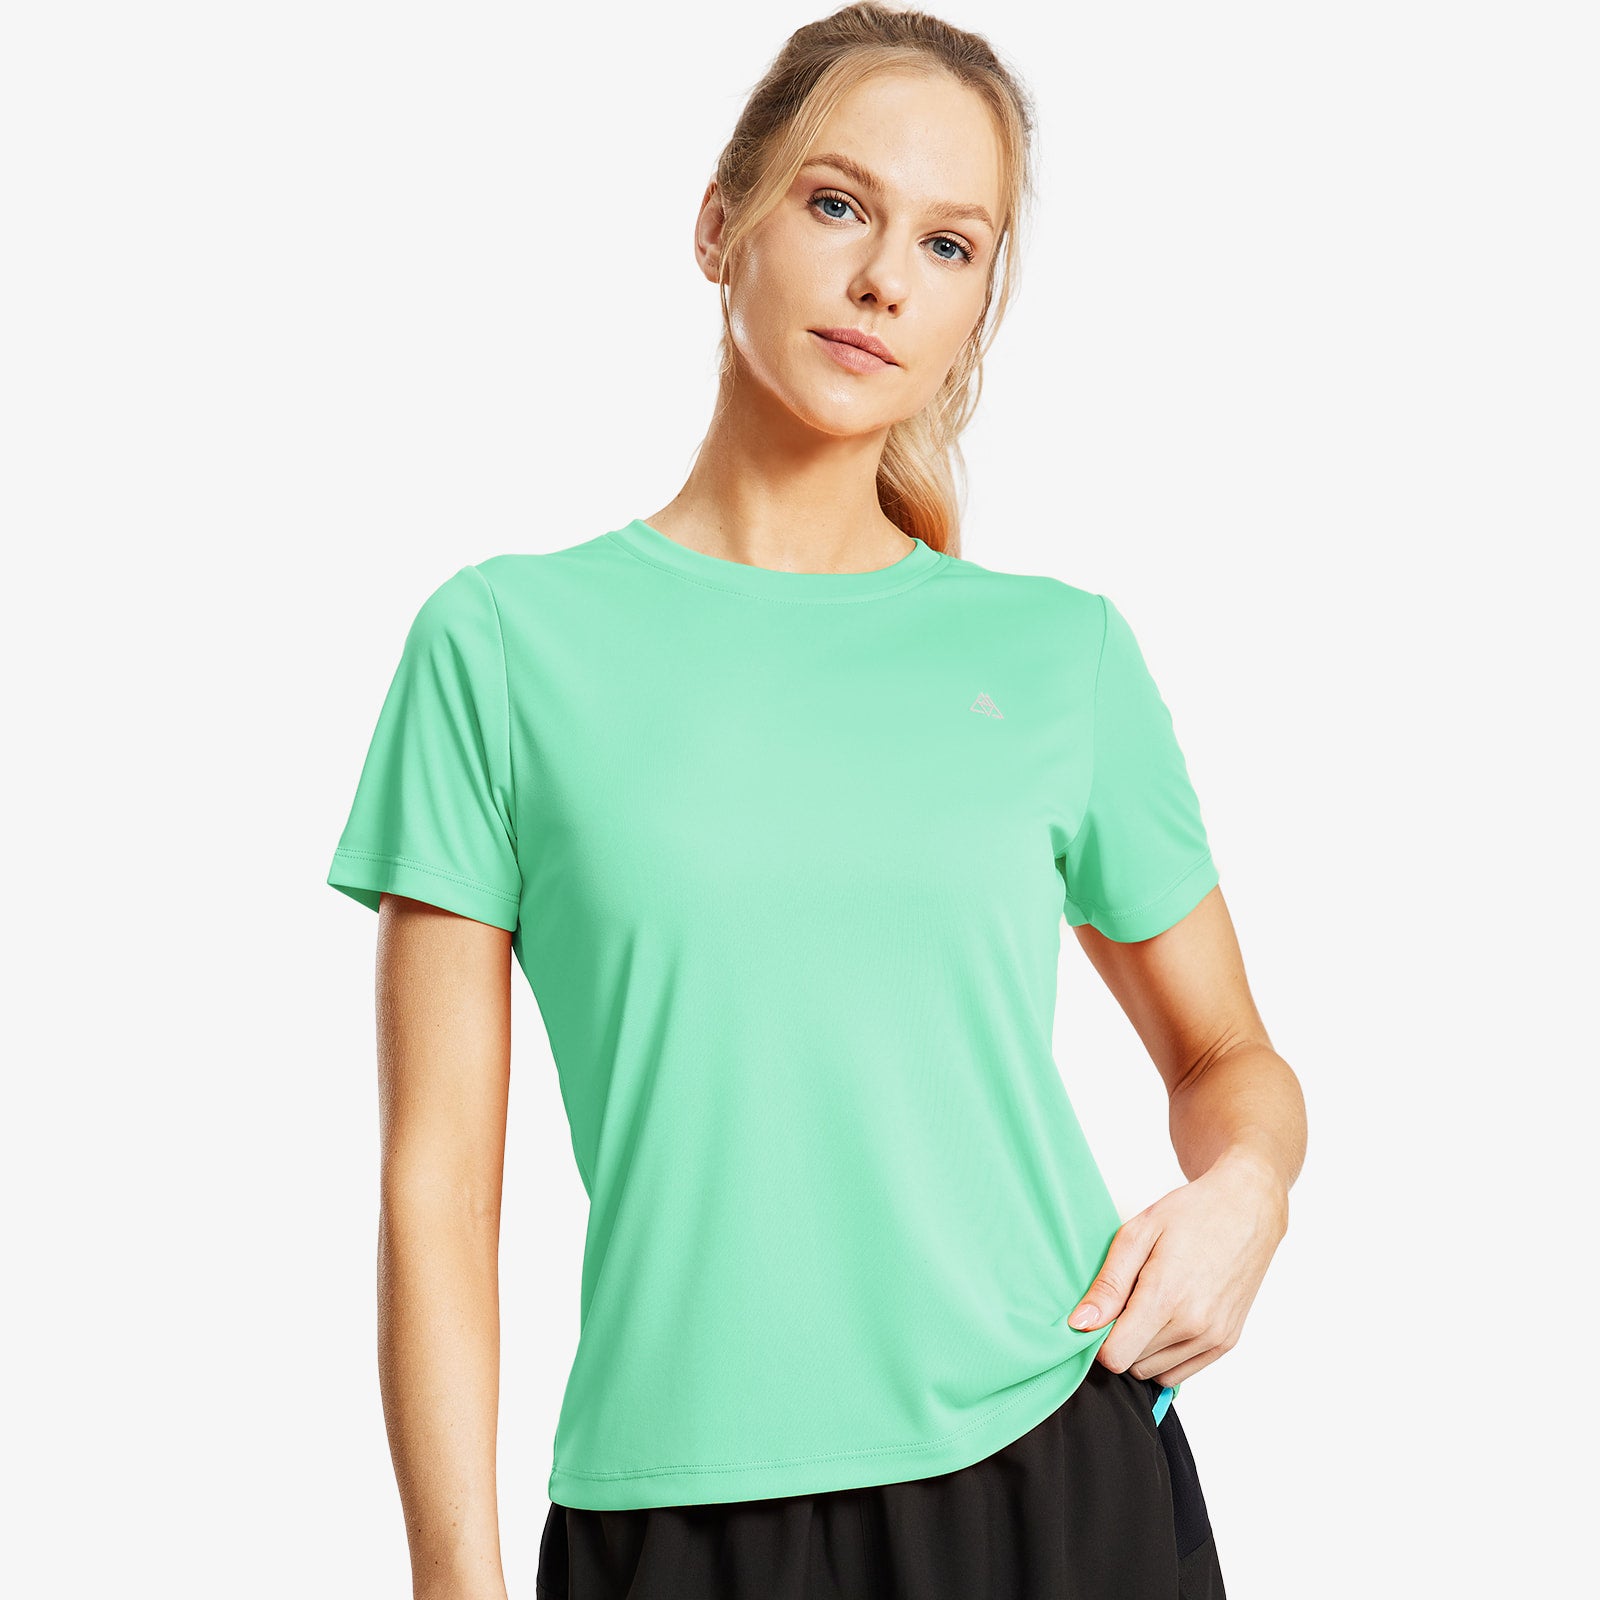 Slim Indio Tee - Black Cotton T Shirt, Womens Workout Shirts